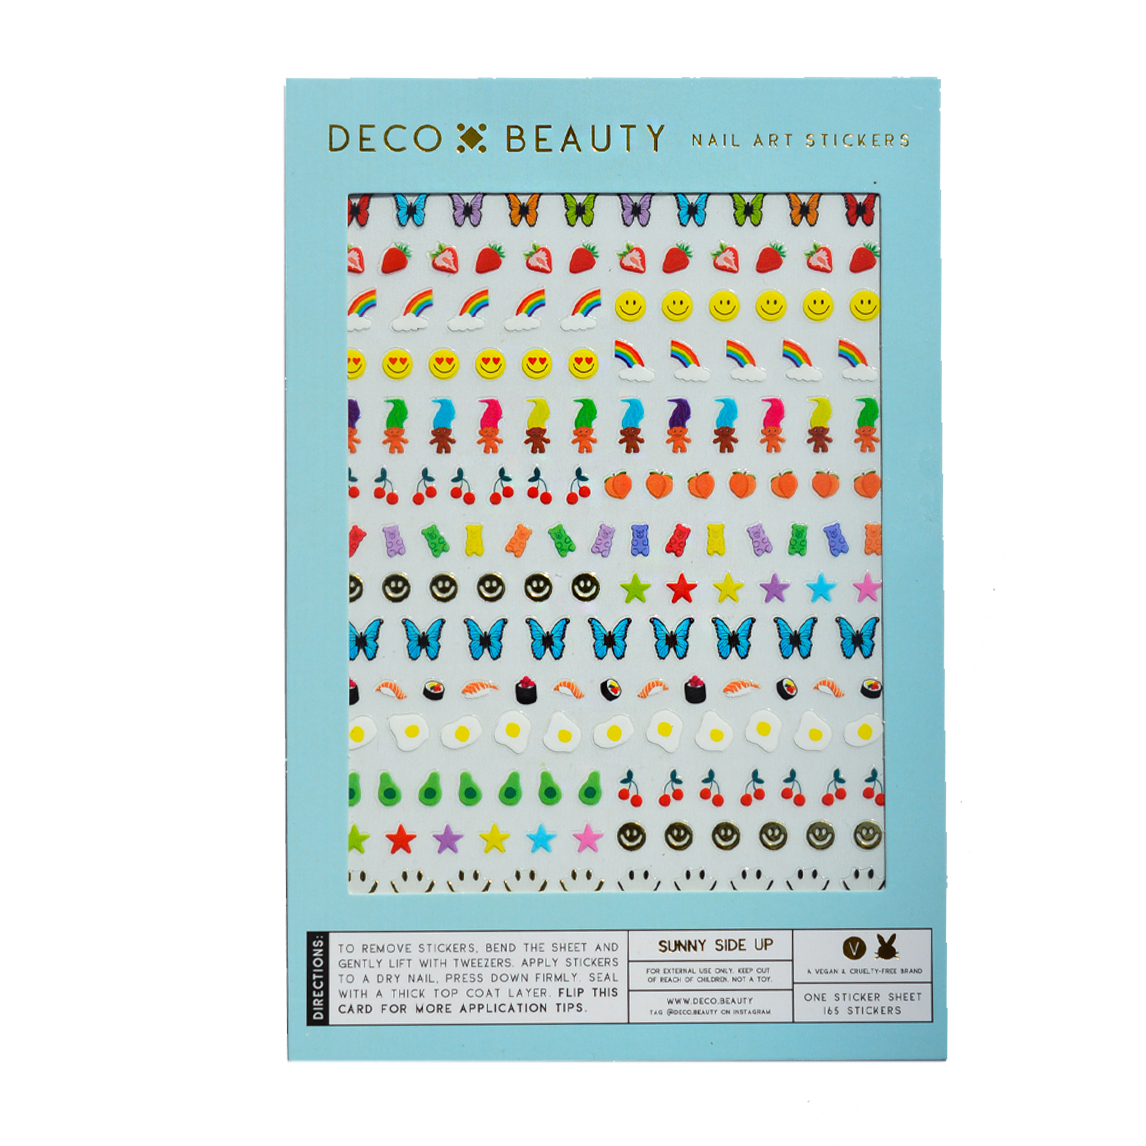 LE x Deco Beauty Nail Art Stickers